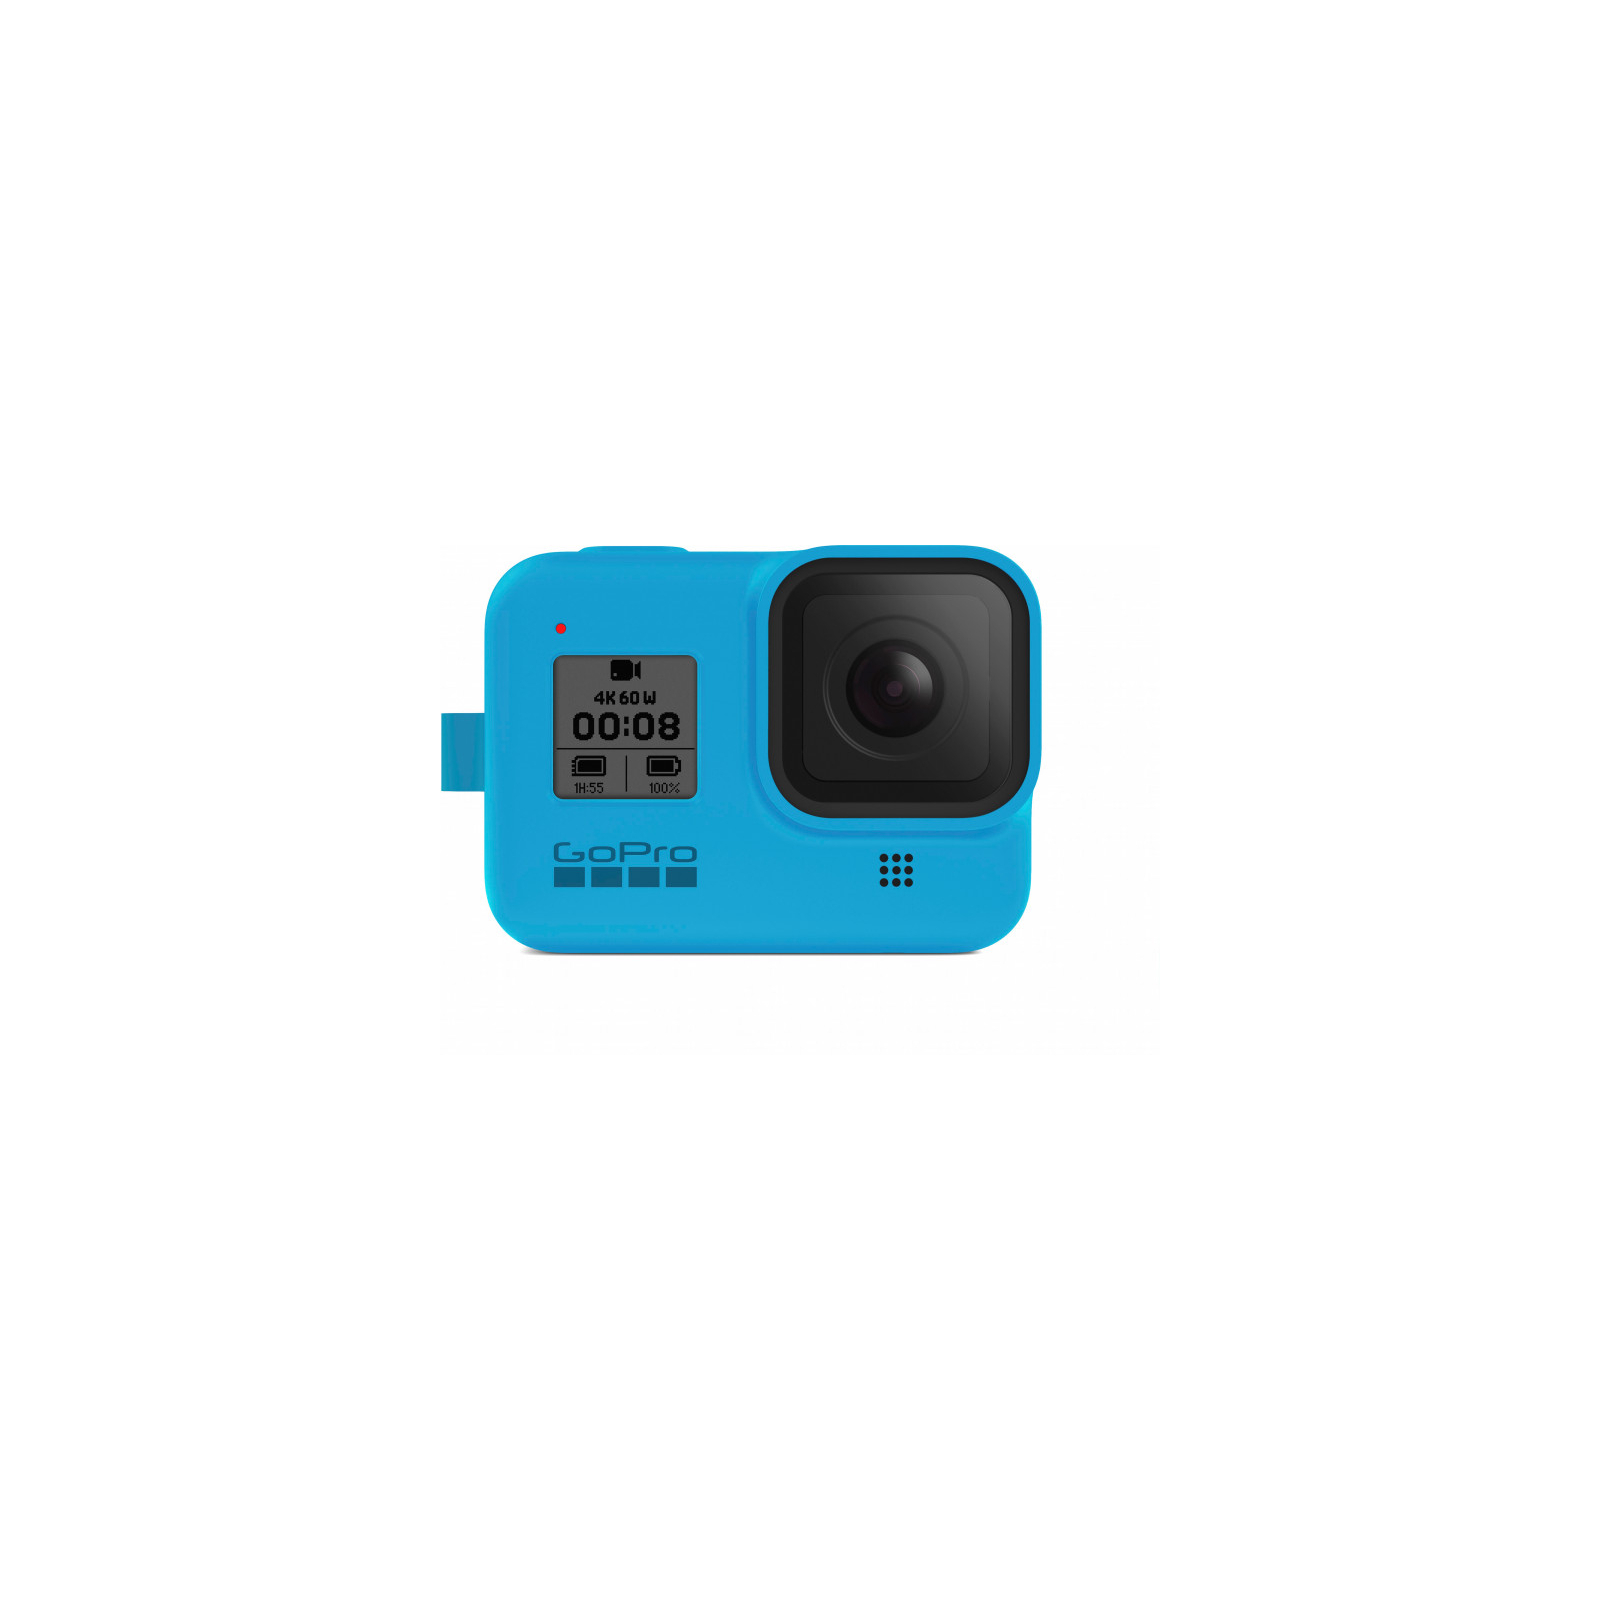 Аксессуар к экшн-камерам GoPro Sleeve&Lanyard Blue для HERO8 (AJSST-003) изображение 3